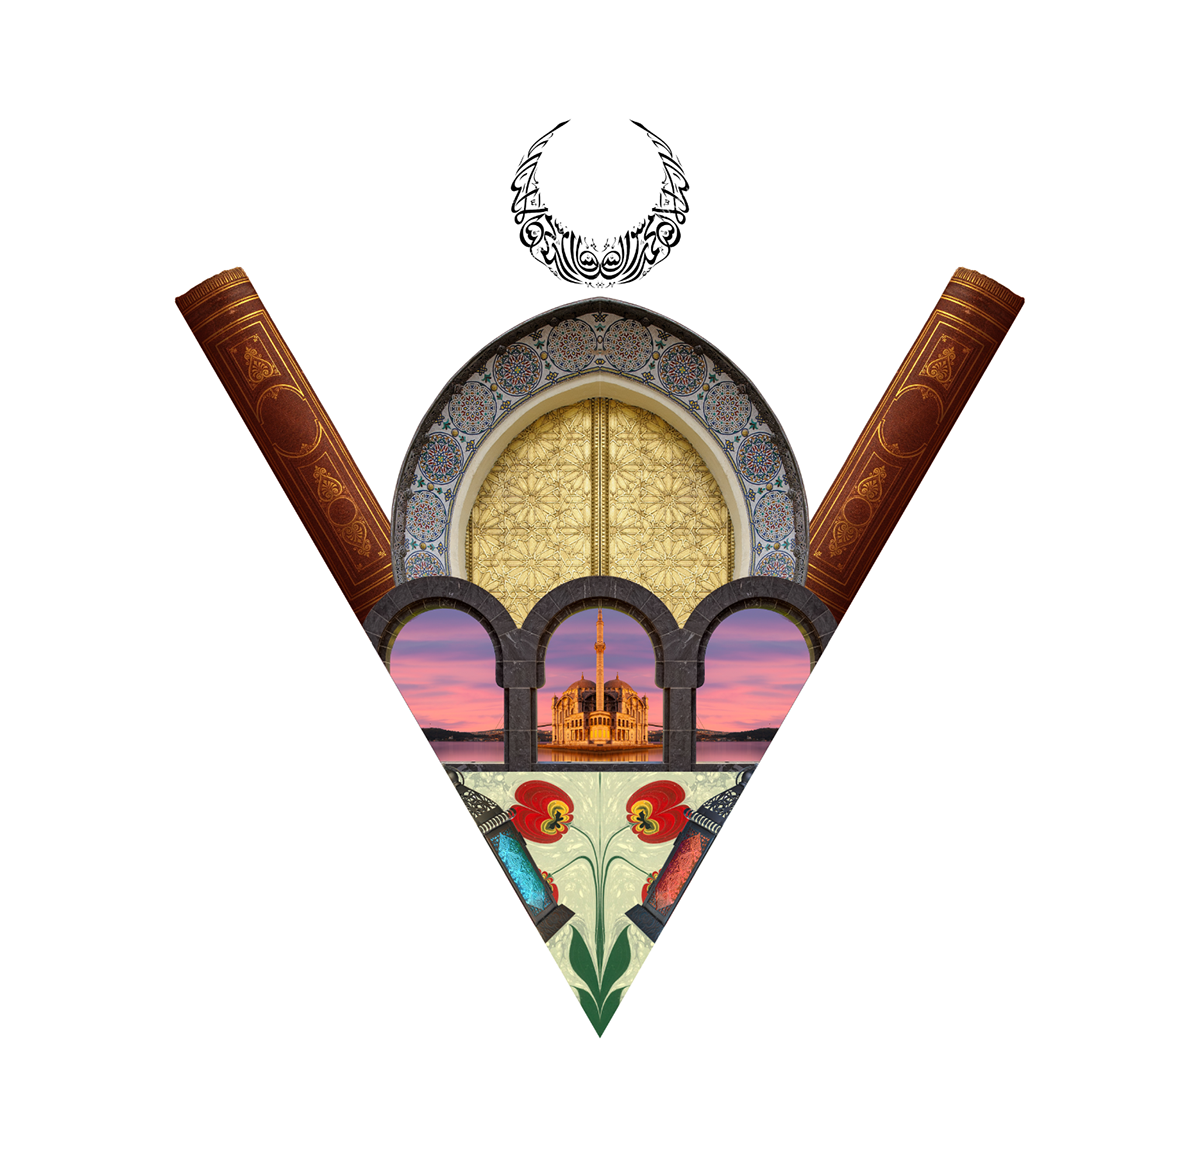 islam istanbul bienal pattern